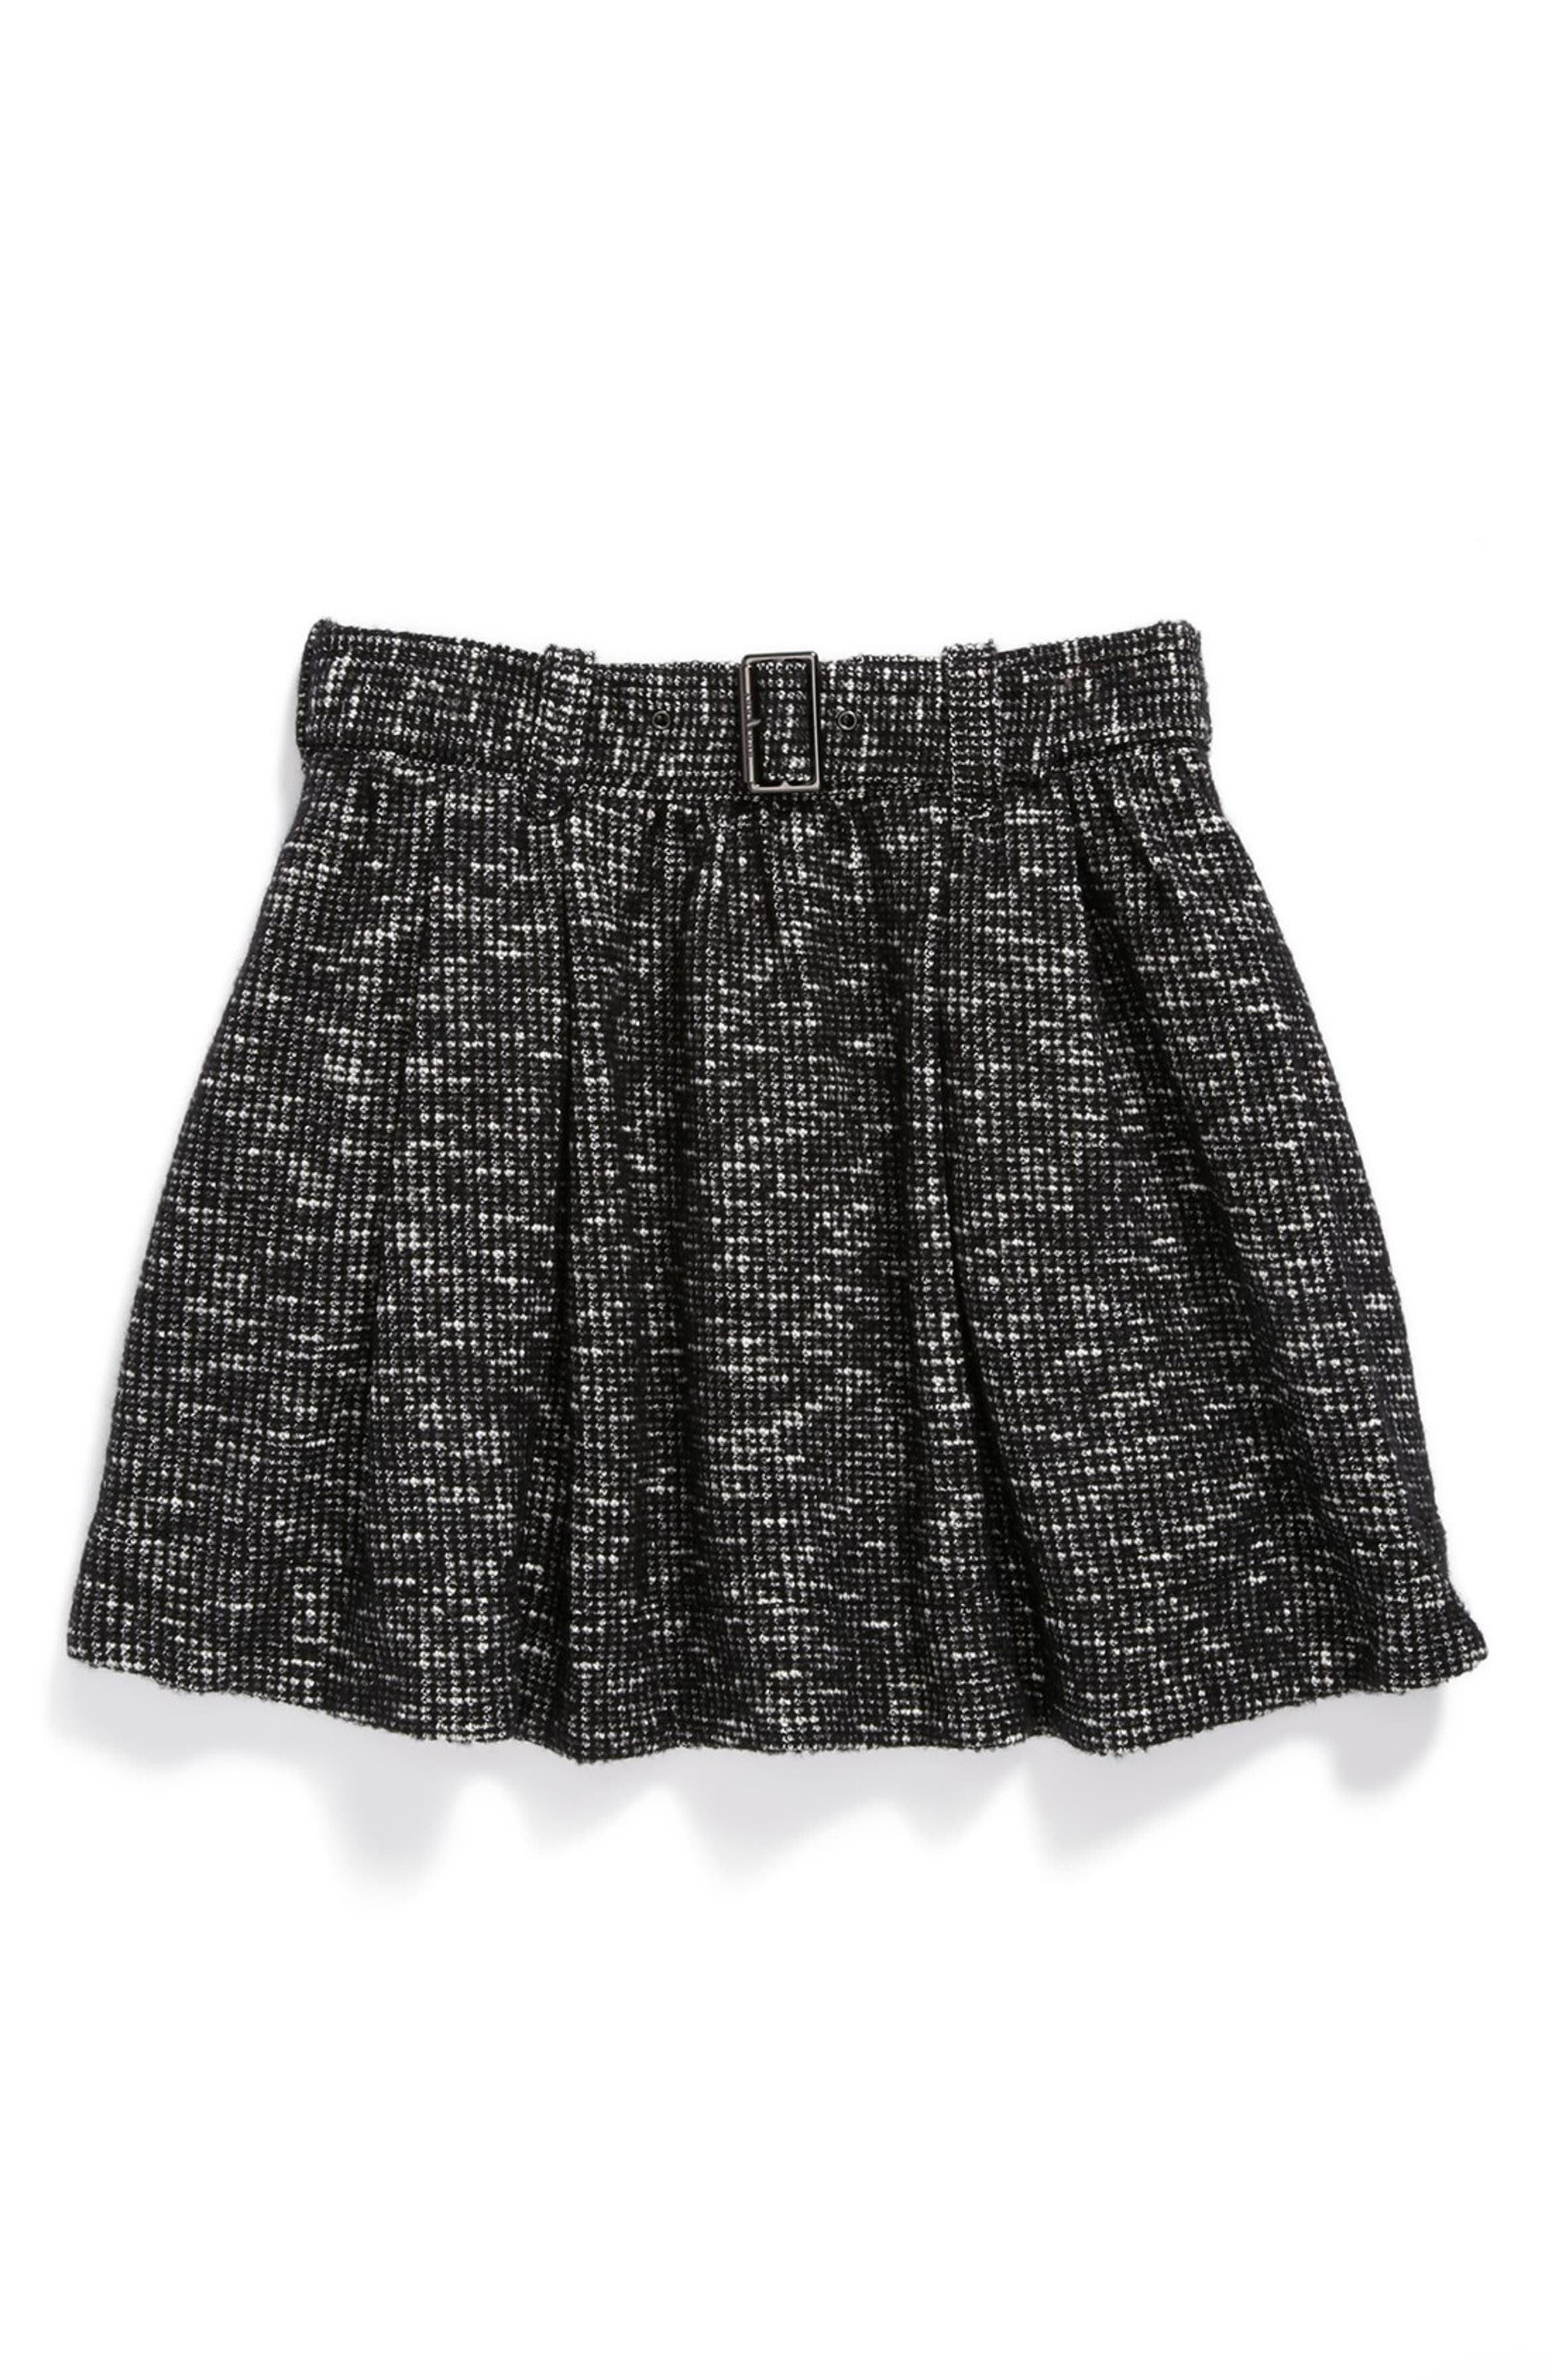 Burberry Knit Skirt (Big Girls) | Nordstrom